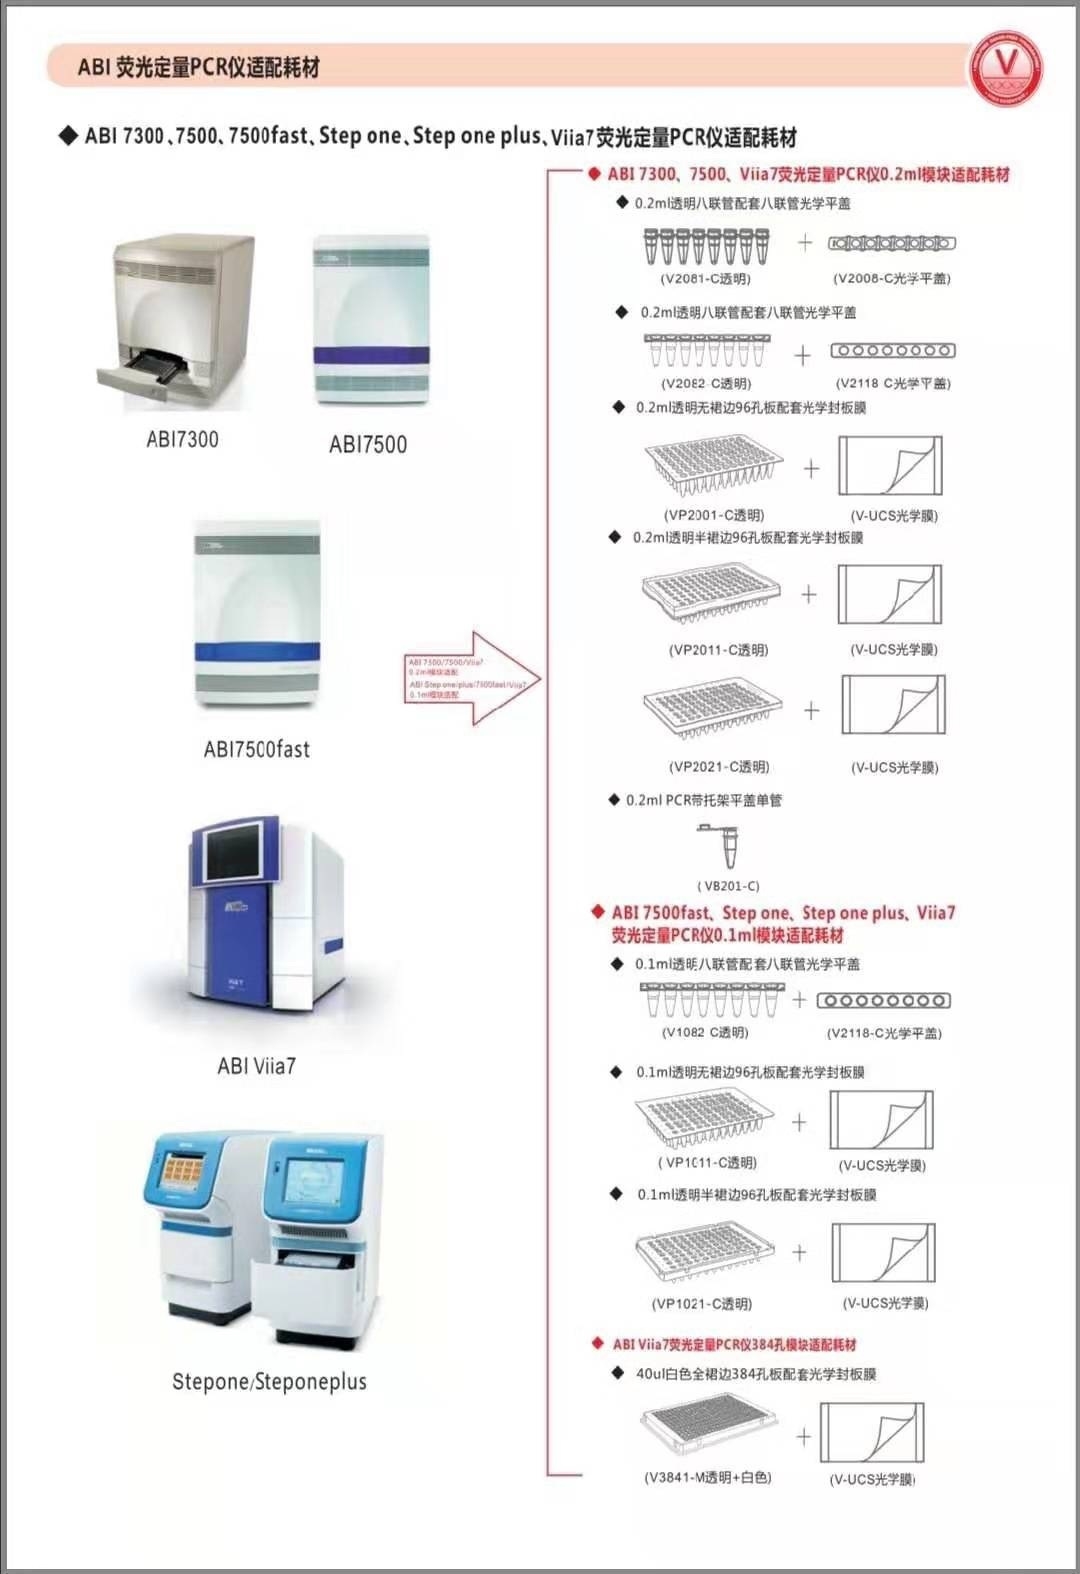 ABI7500,伯乐PCR仪PCR8联排,96孔板V1082-C VP1011-C